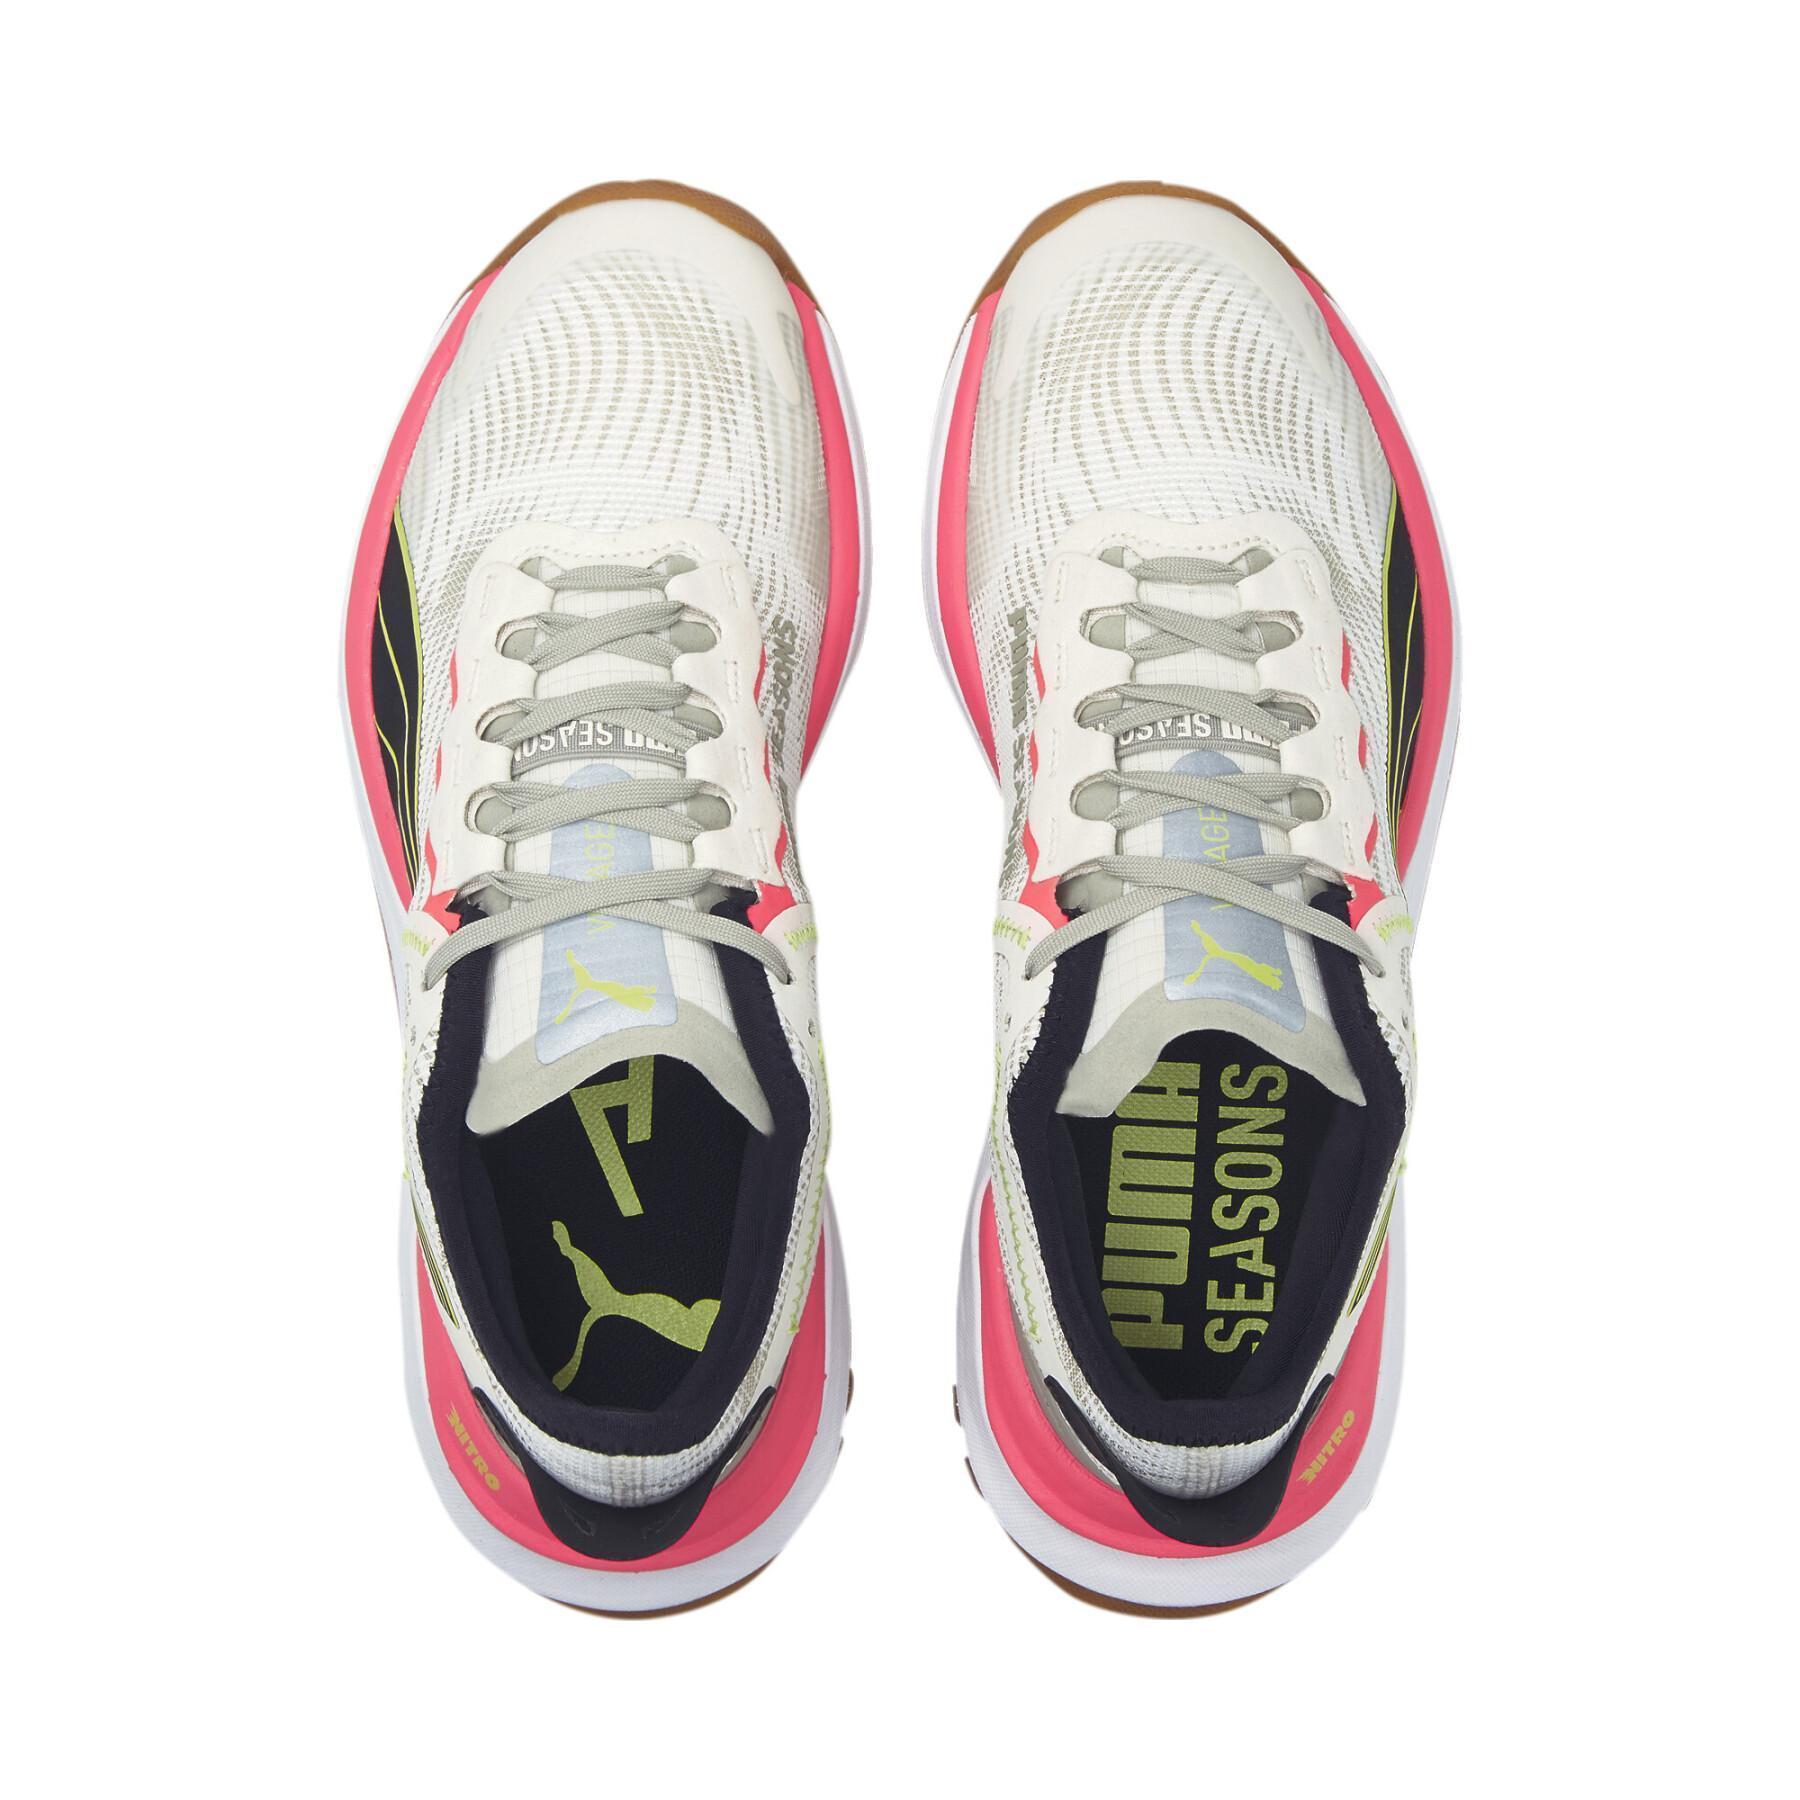 Women's running shoes Puma Voyage Nitro 2